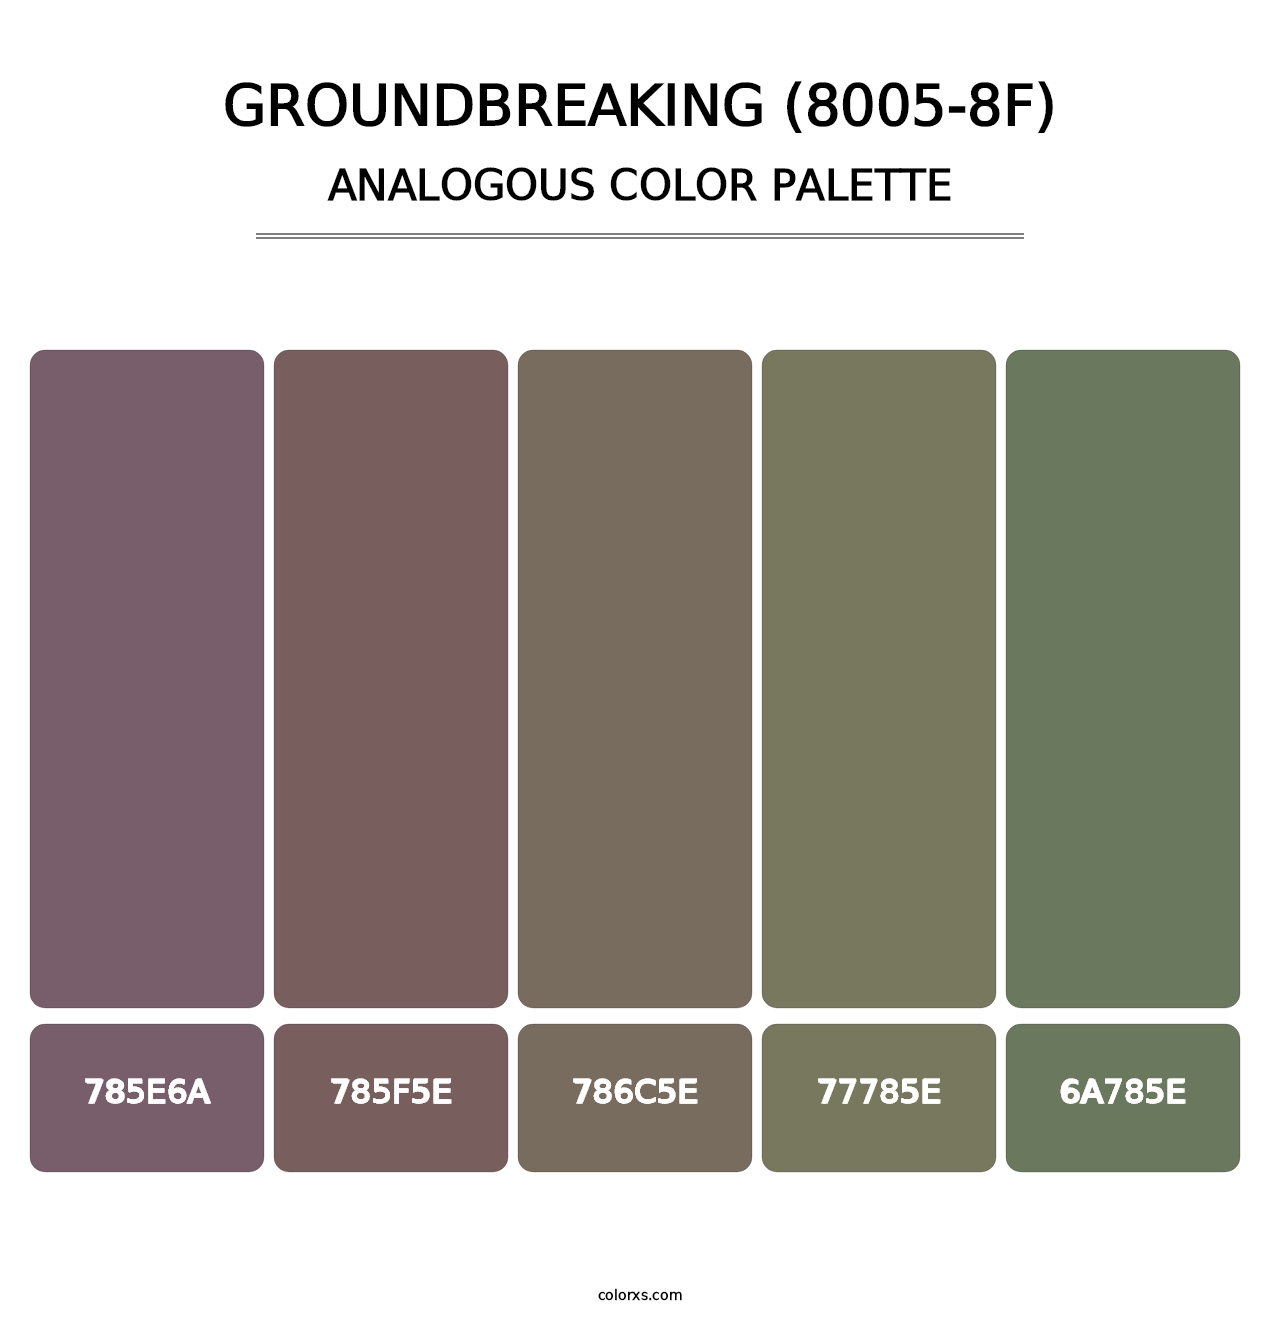 Groundbreaking (8005-8F) - Analogous Color Palette